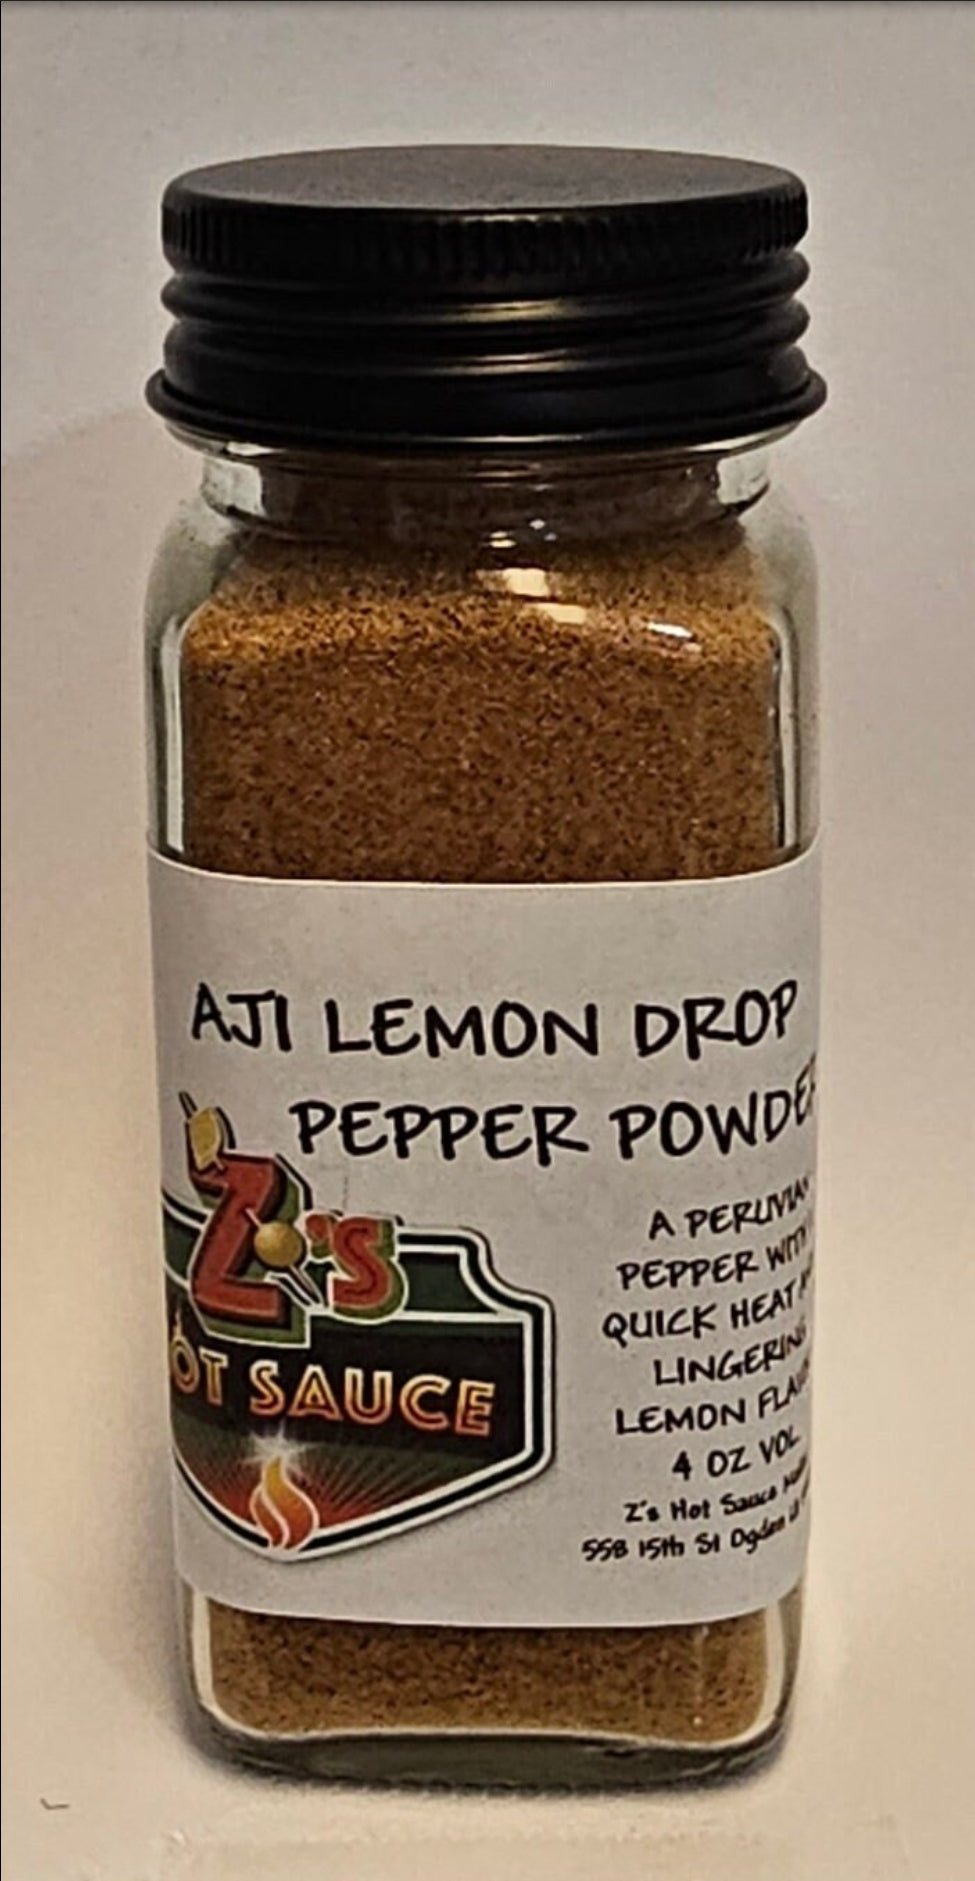 Aji Lemon Pepper Powder.